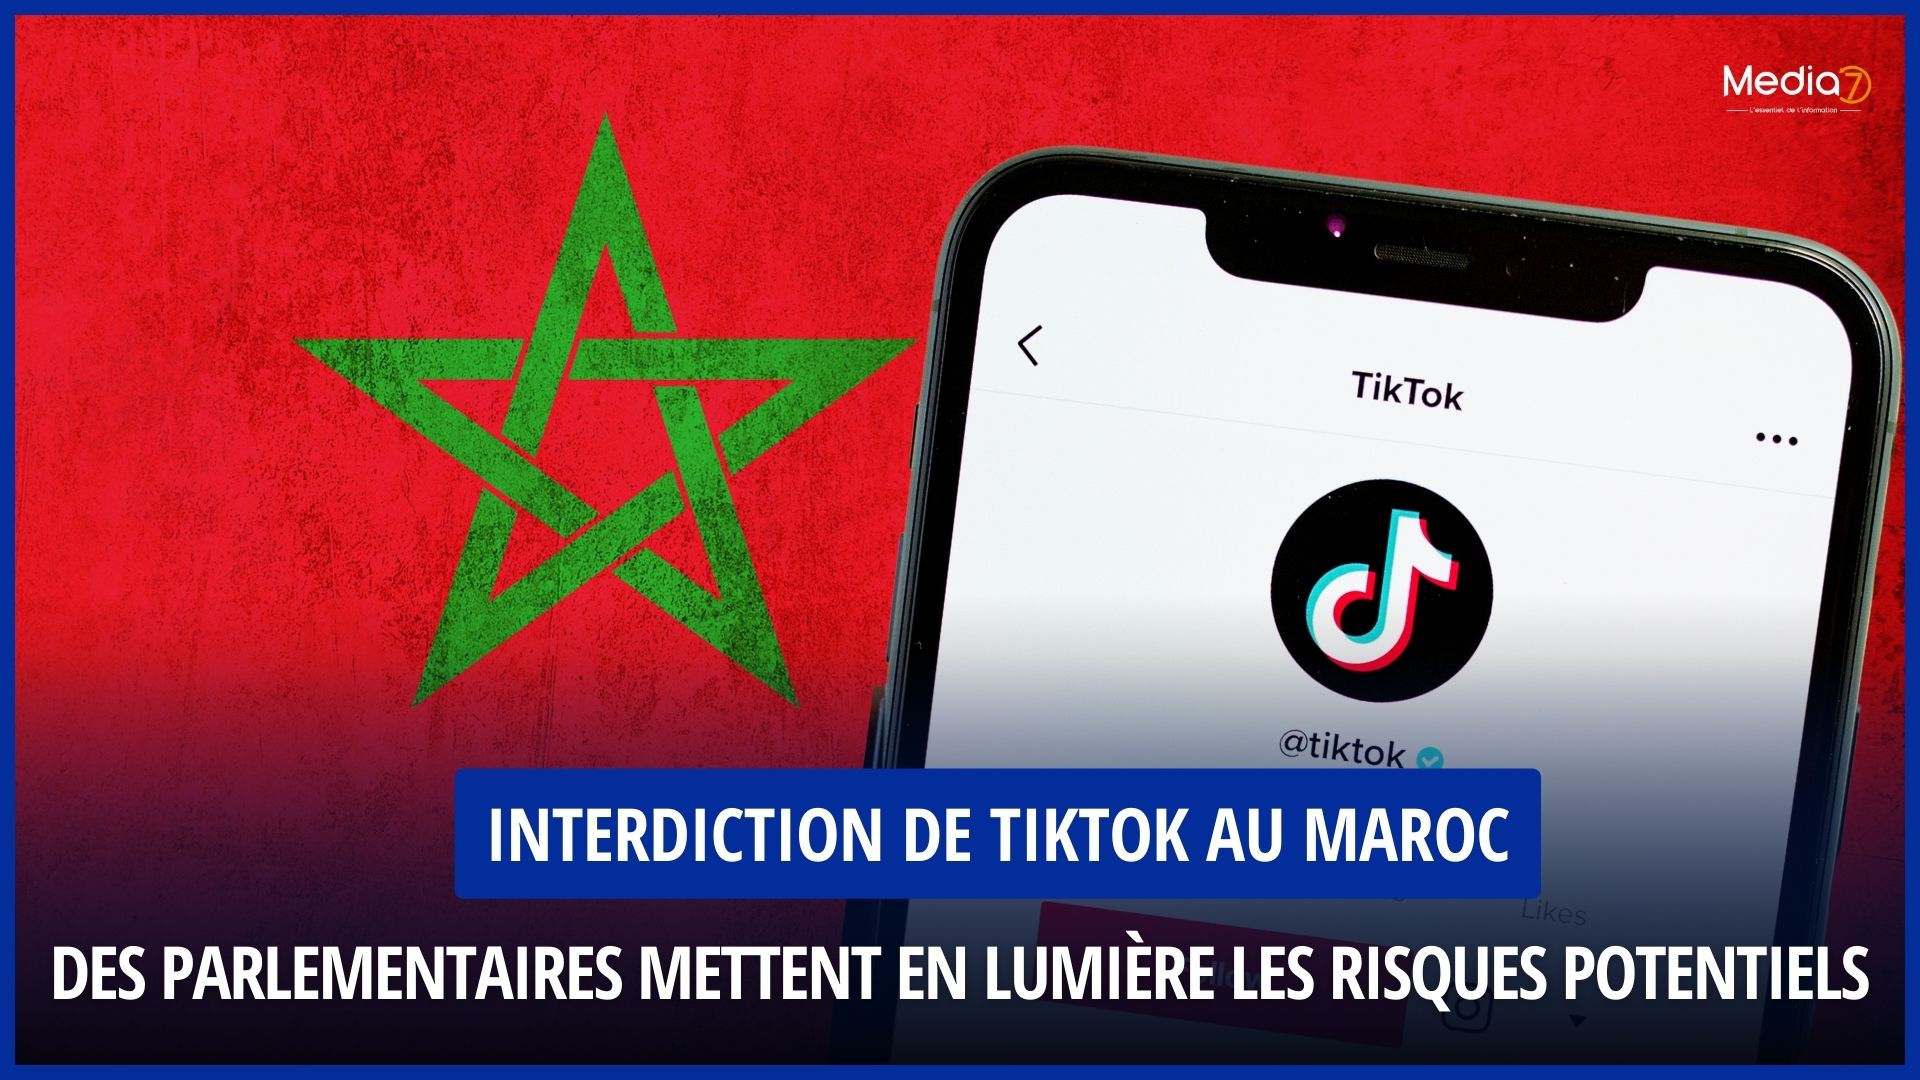 Ban on TikTok in Morocco: Parliamentarians Highlight Potential Risks